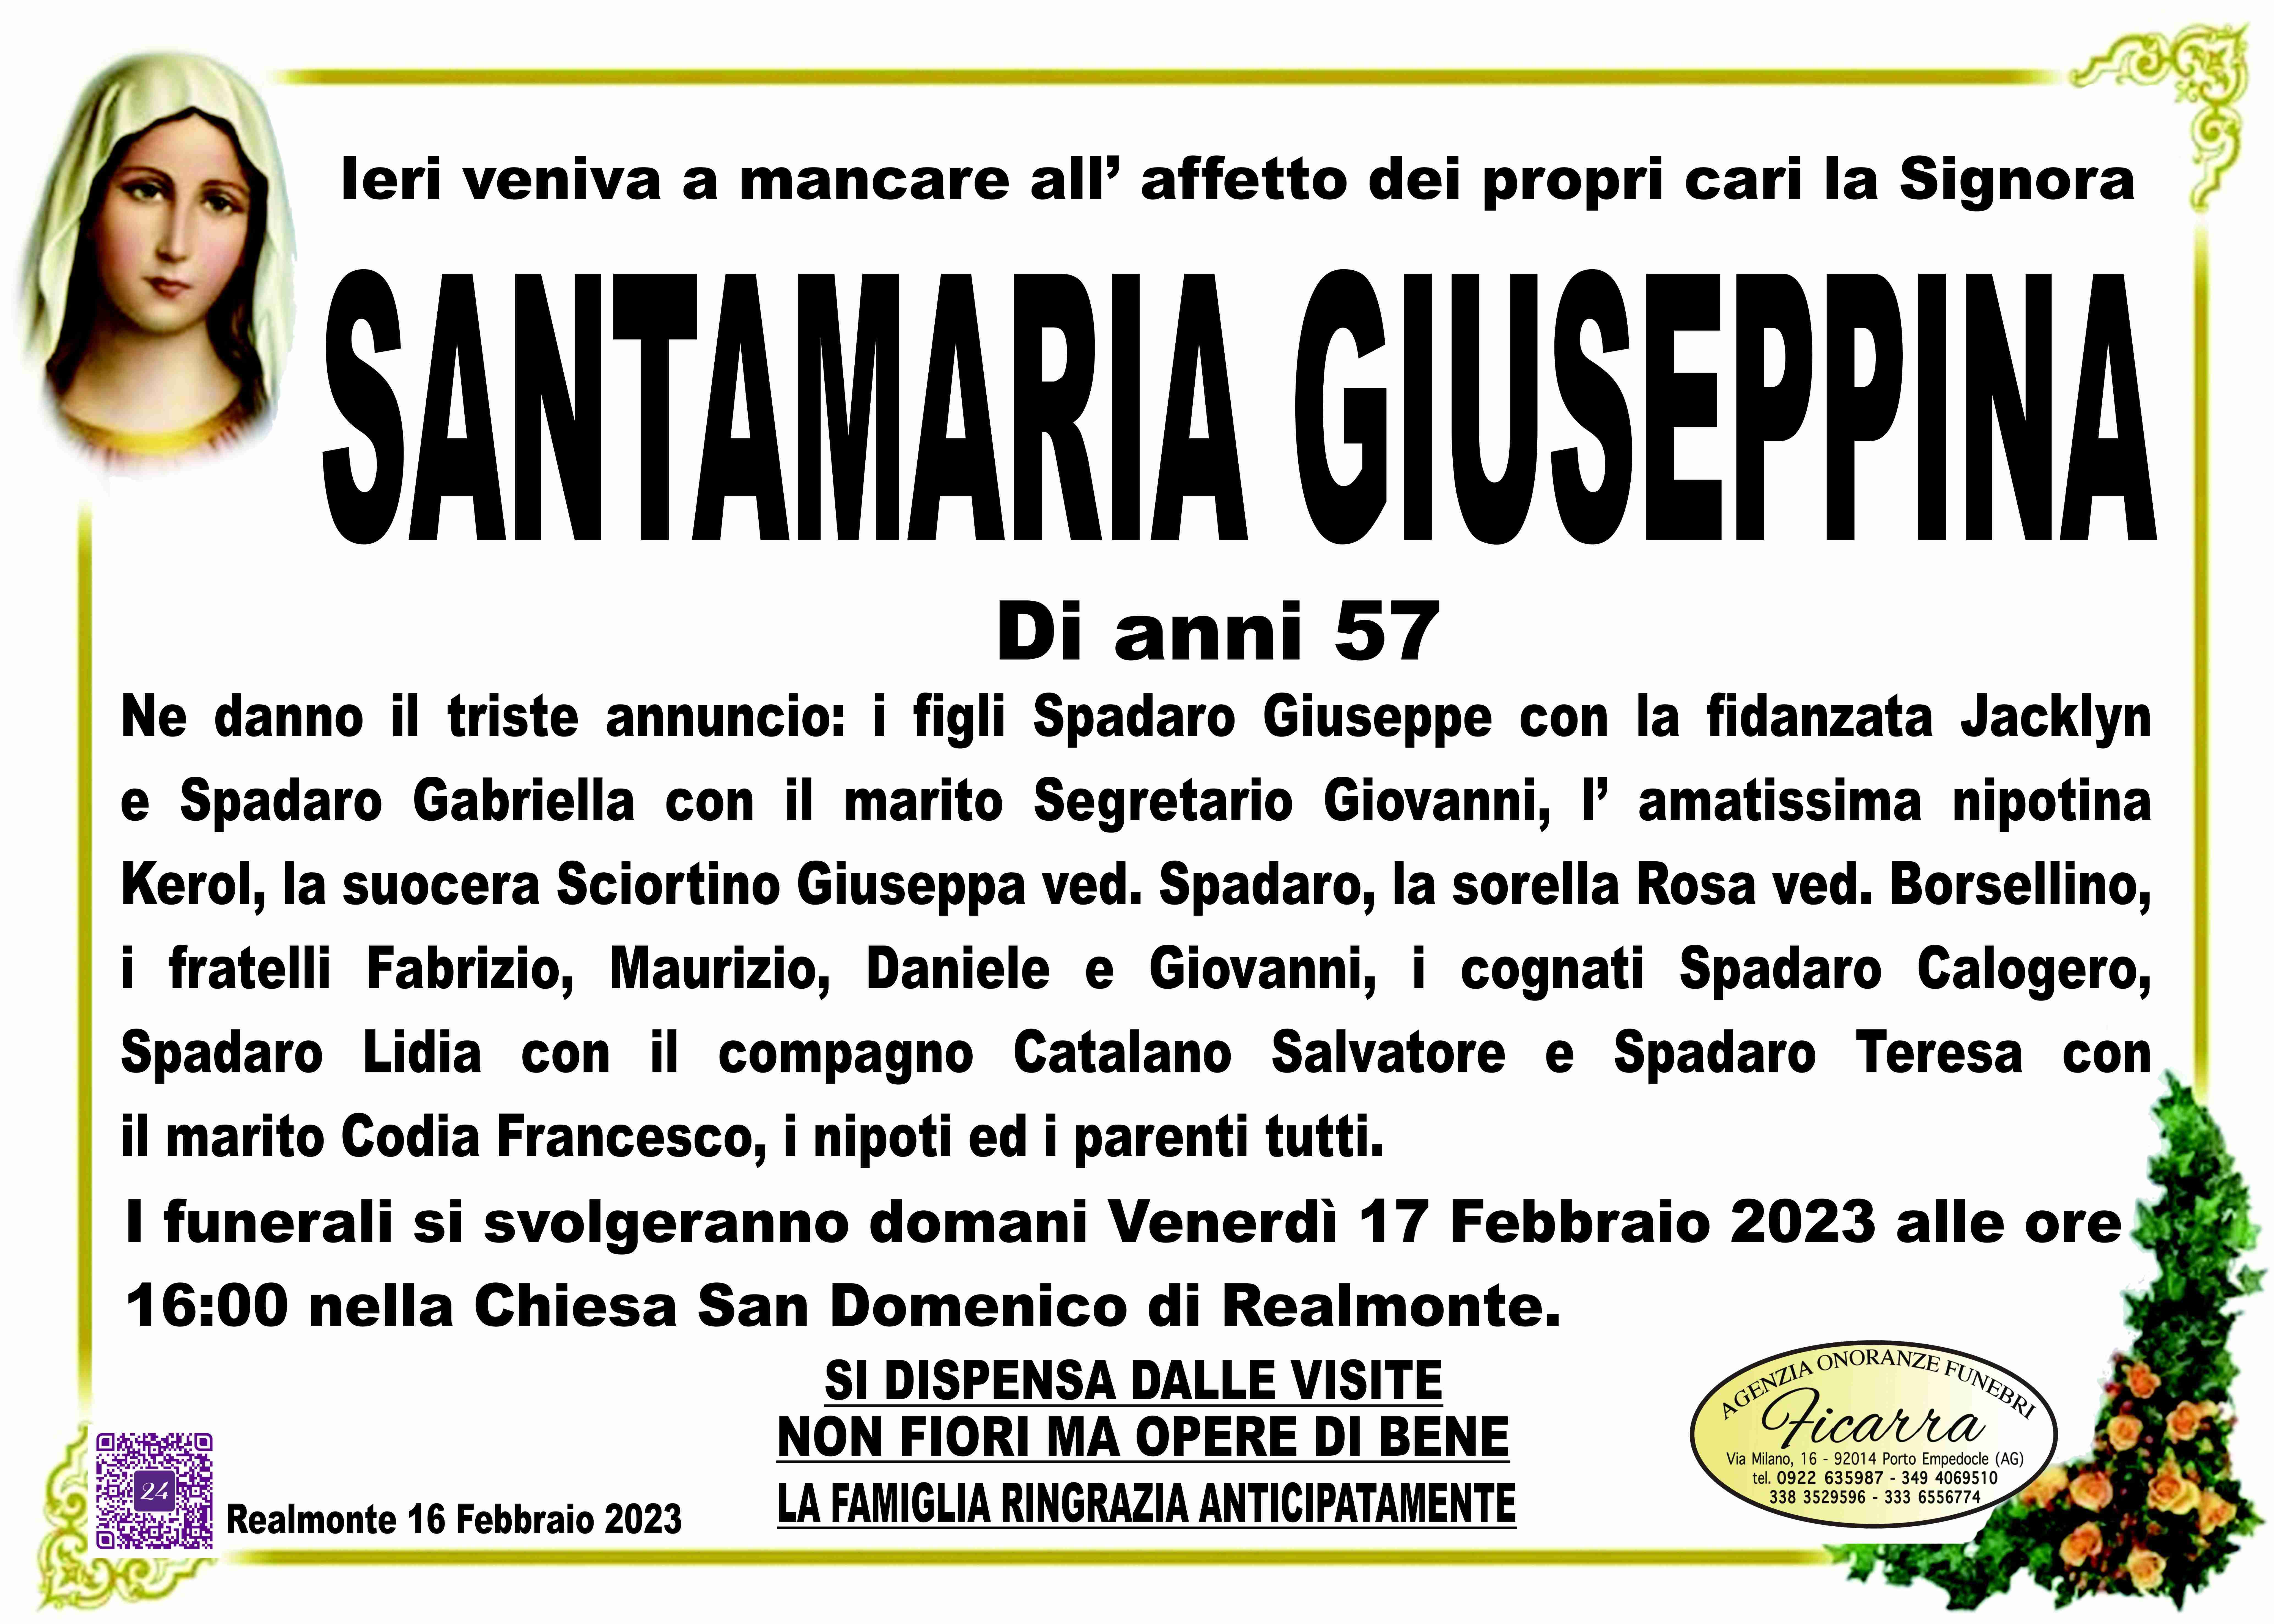 Giuseppina Santamaria